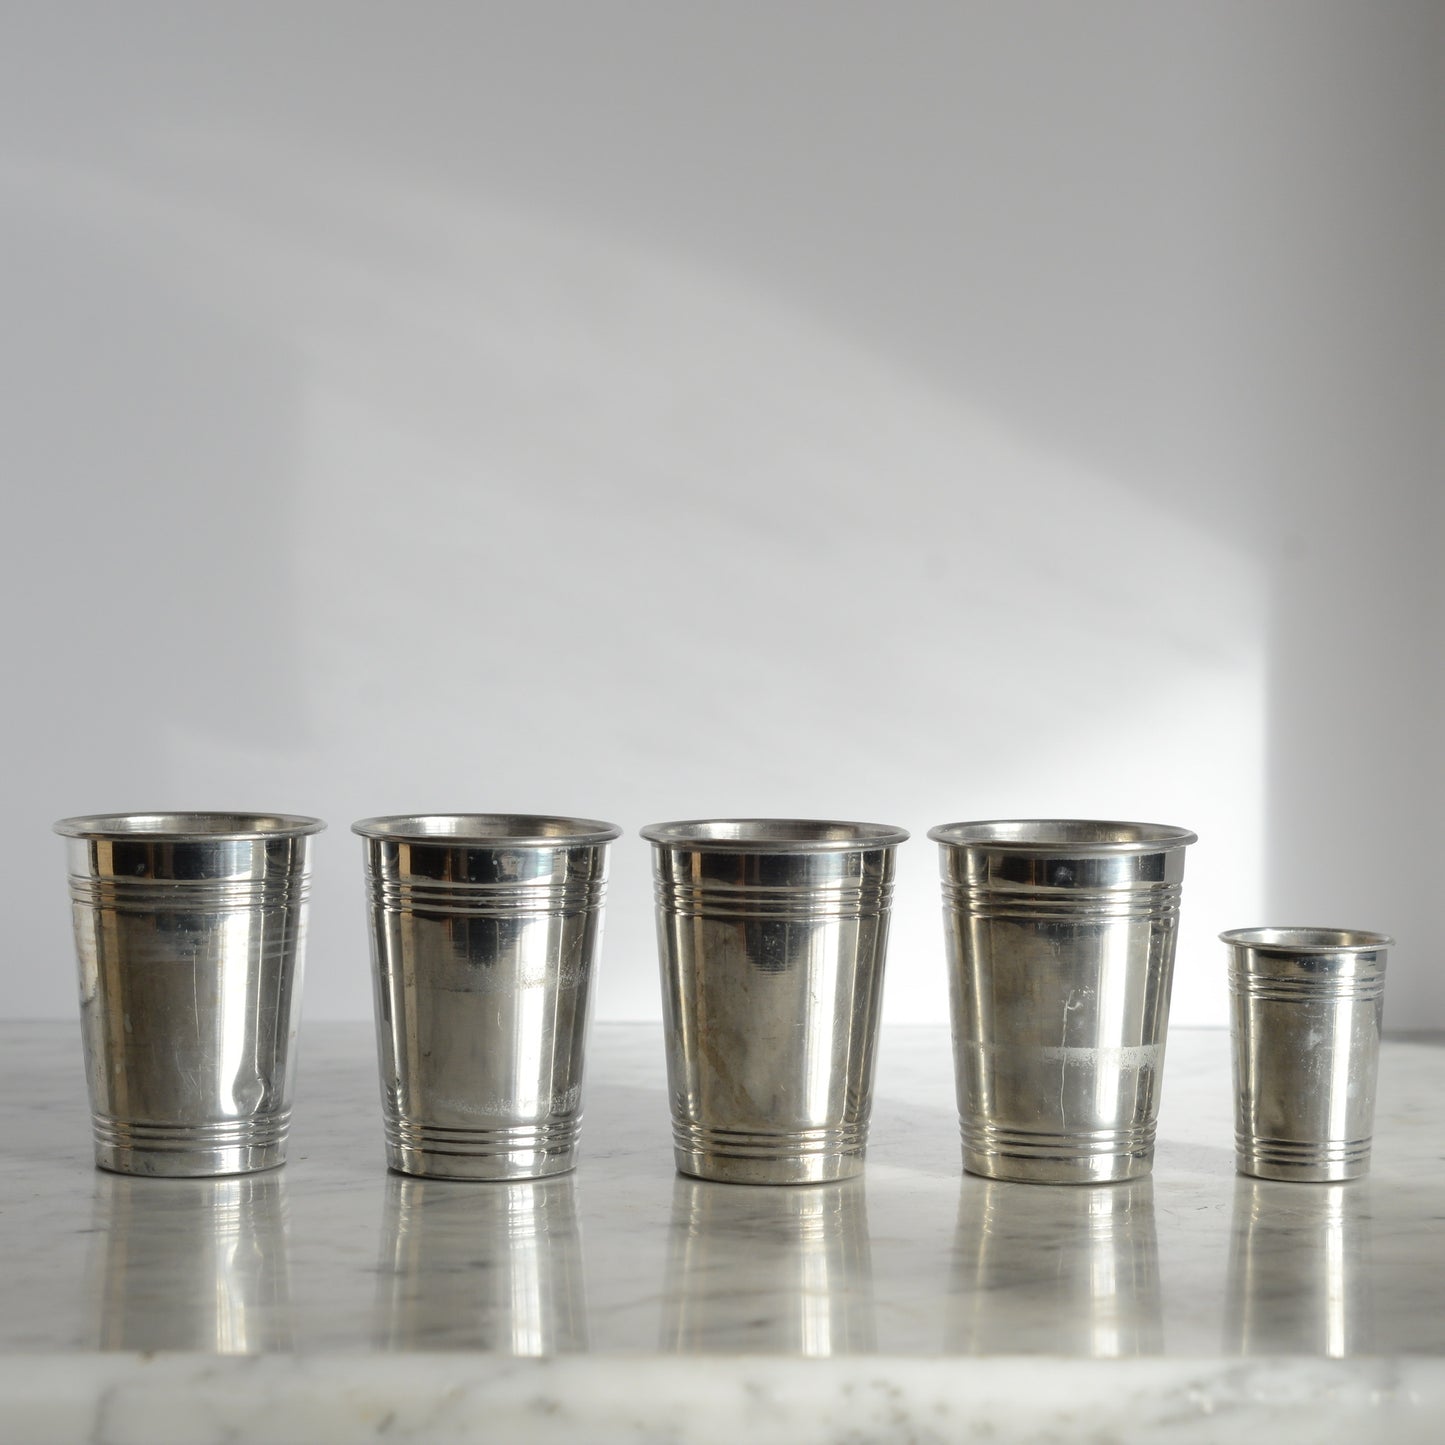 Set of Vintage Aluminum Cups